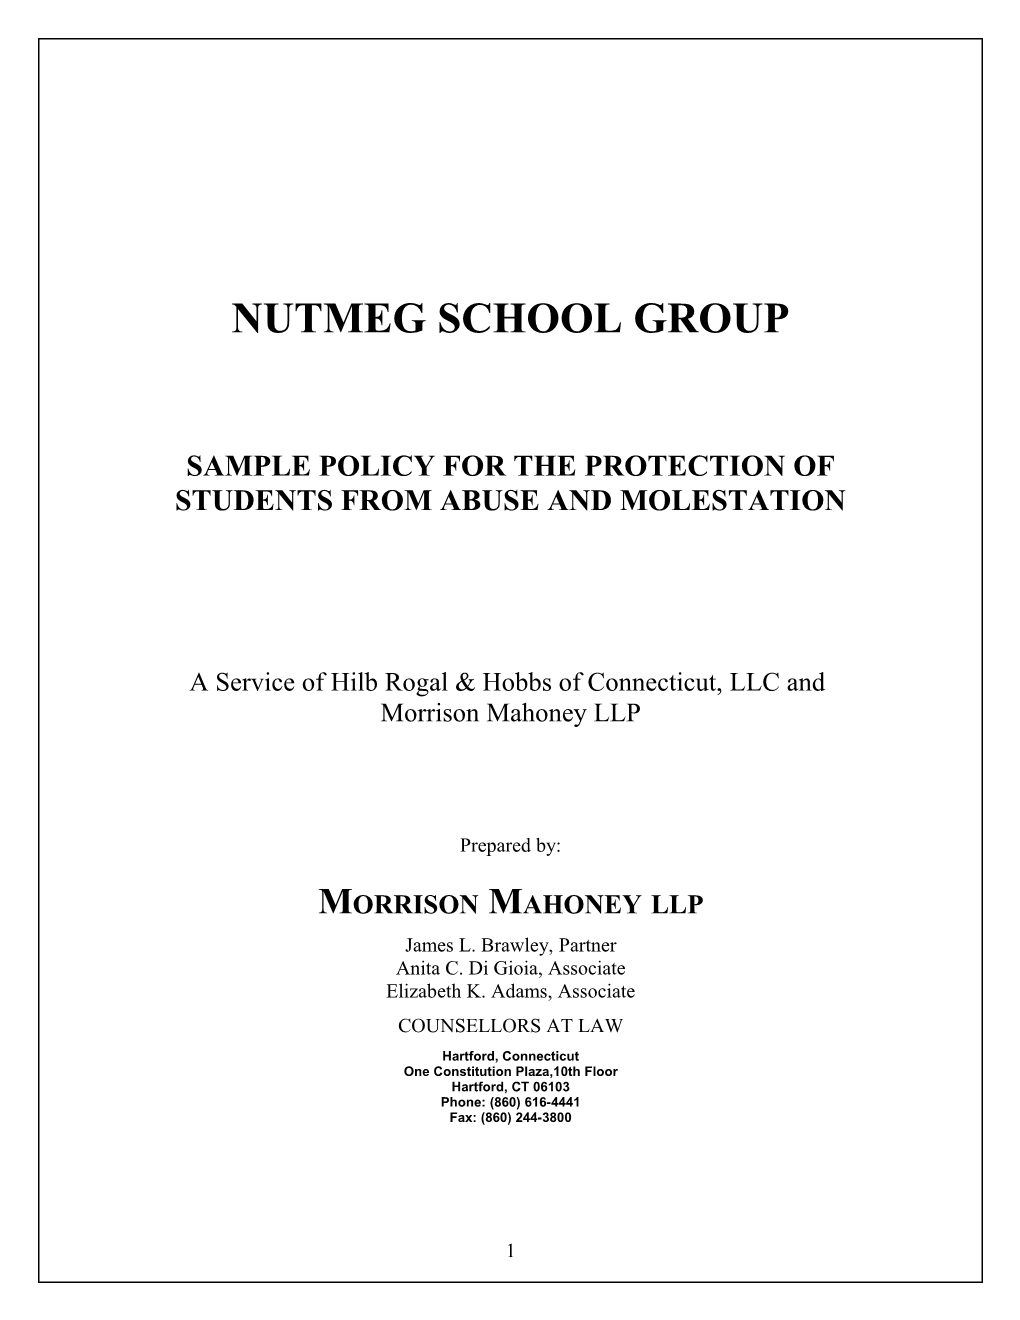 Nutmeg School Group